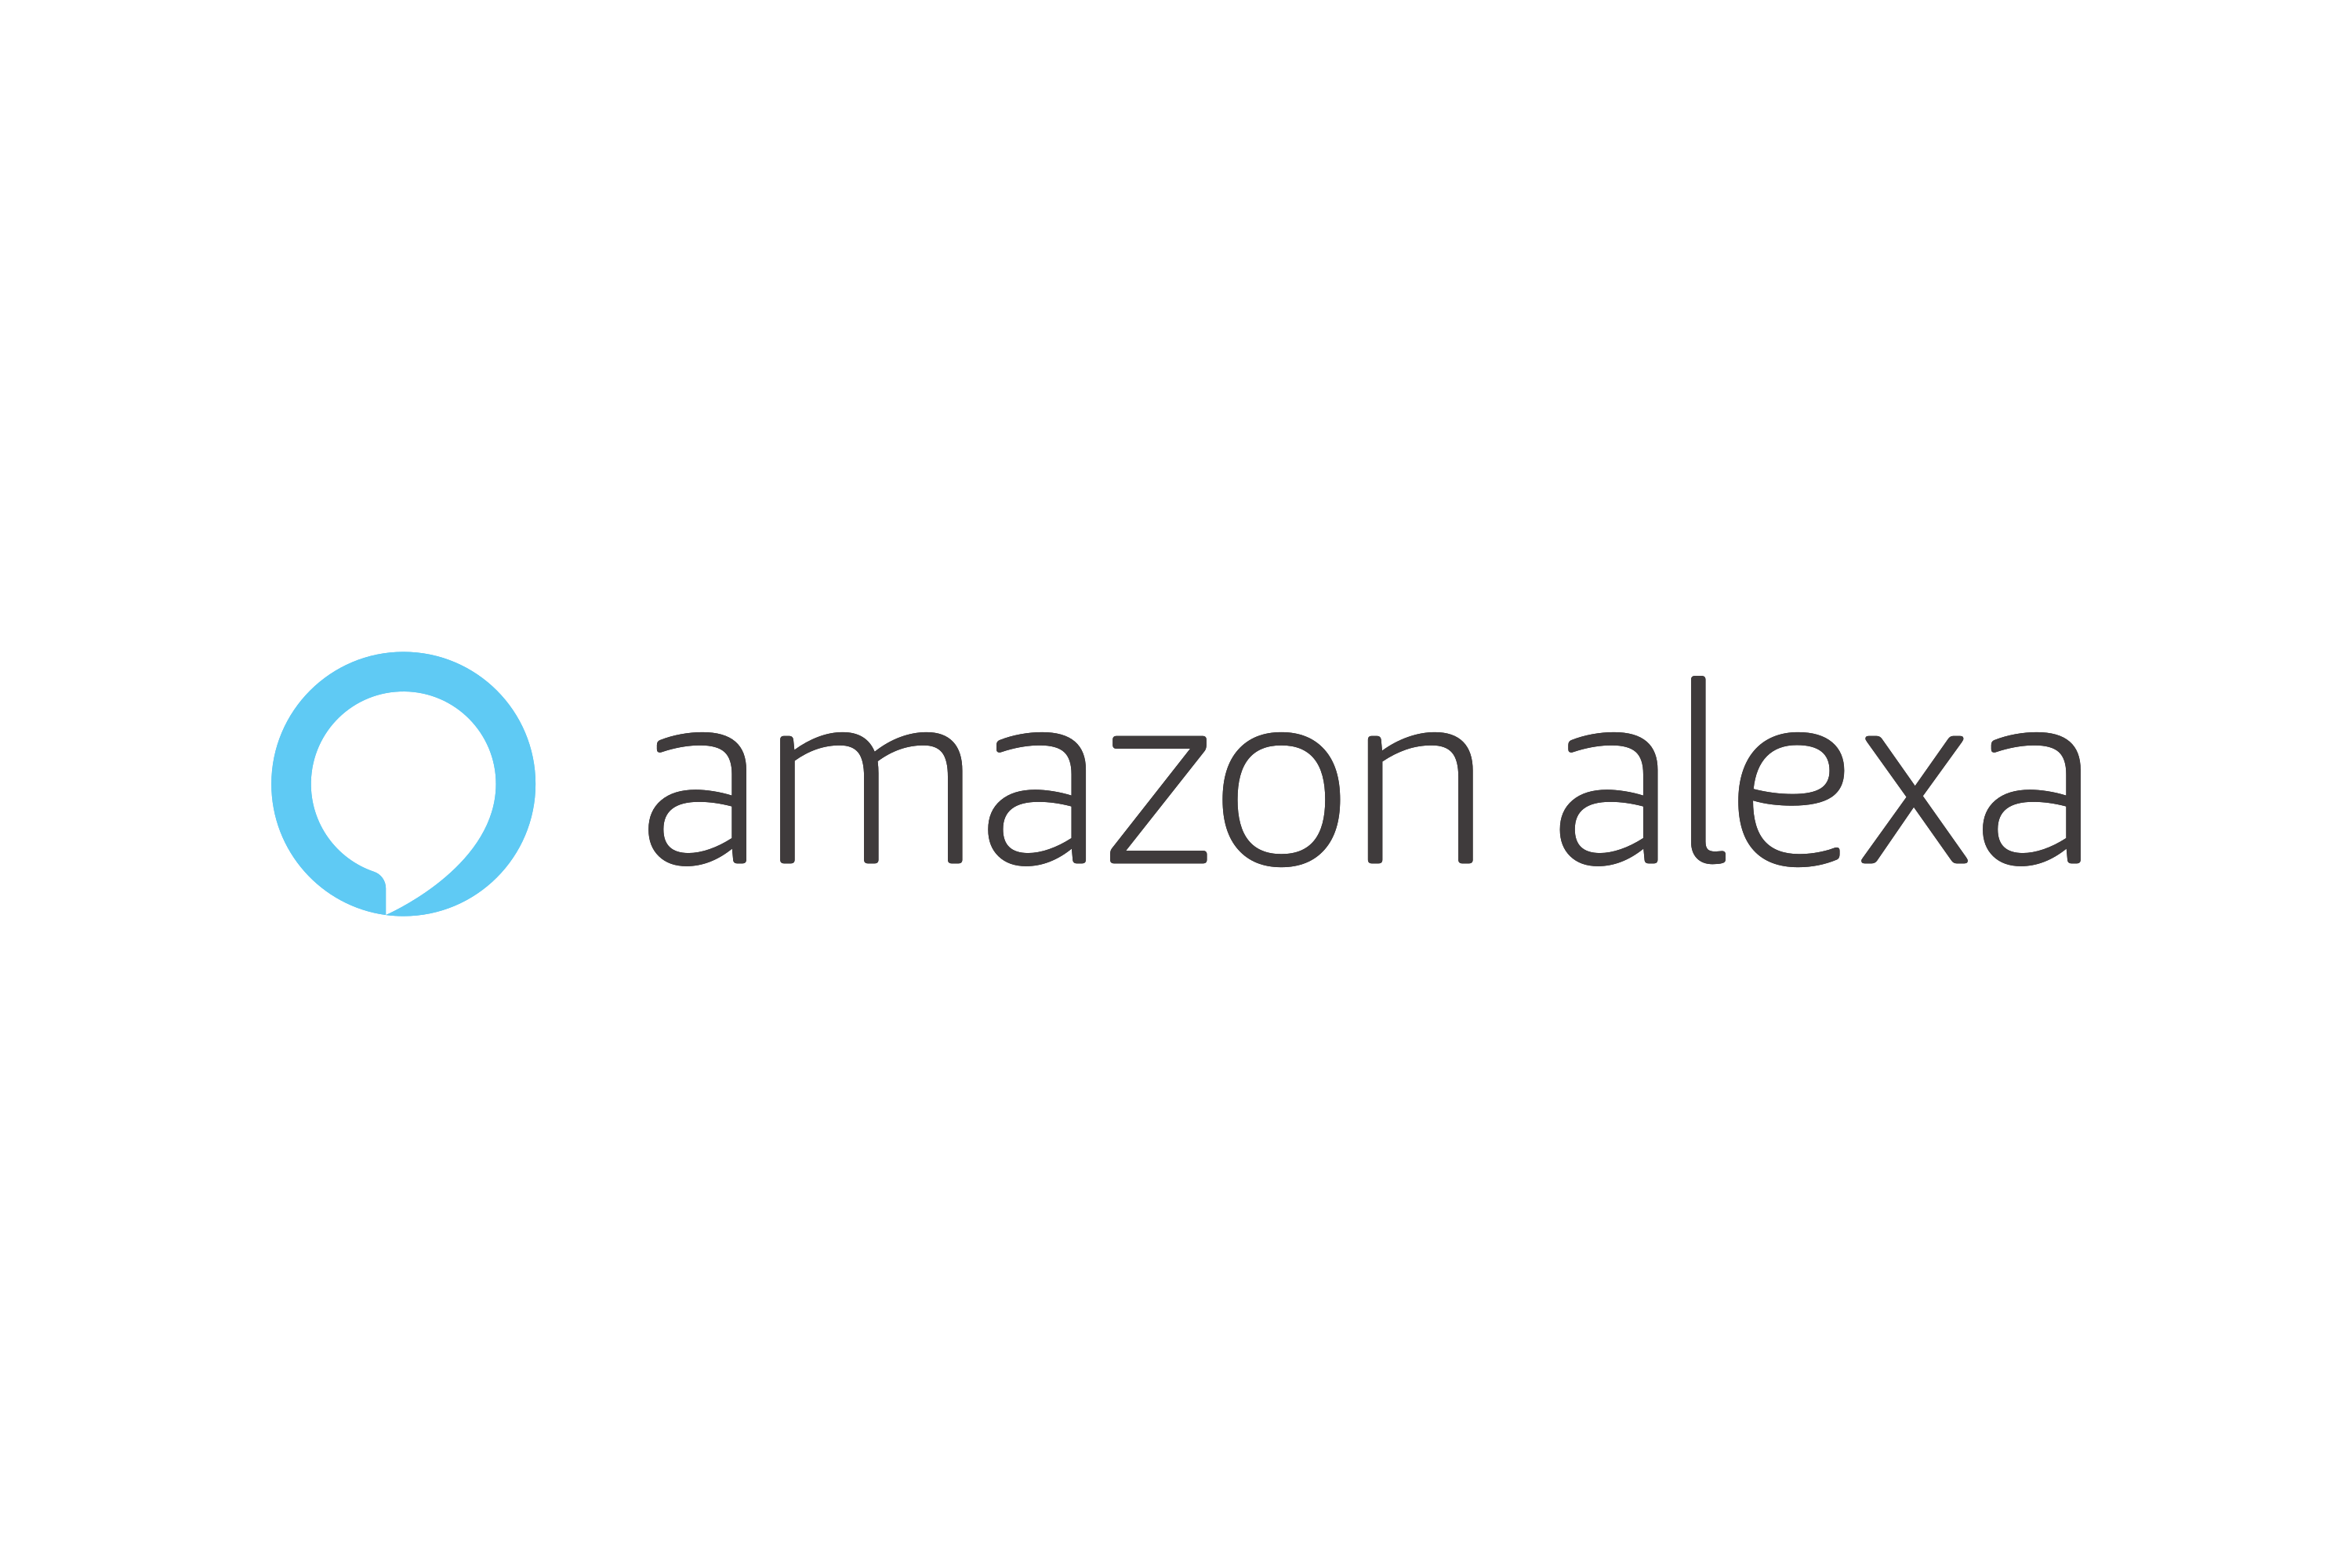 https://download.logo.wine/logo/Amazon_Alexa/Amazon_Alexa-Logo.wine.png